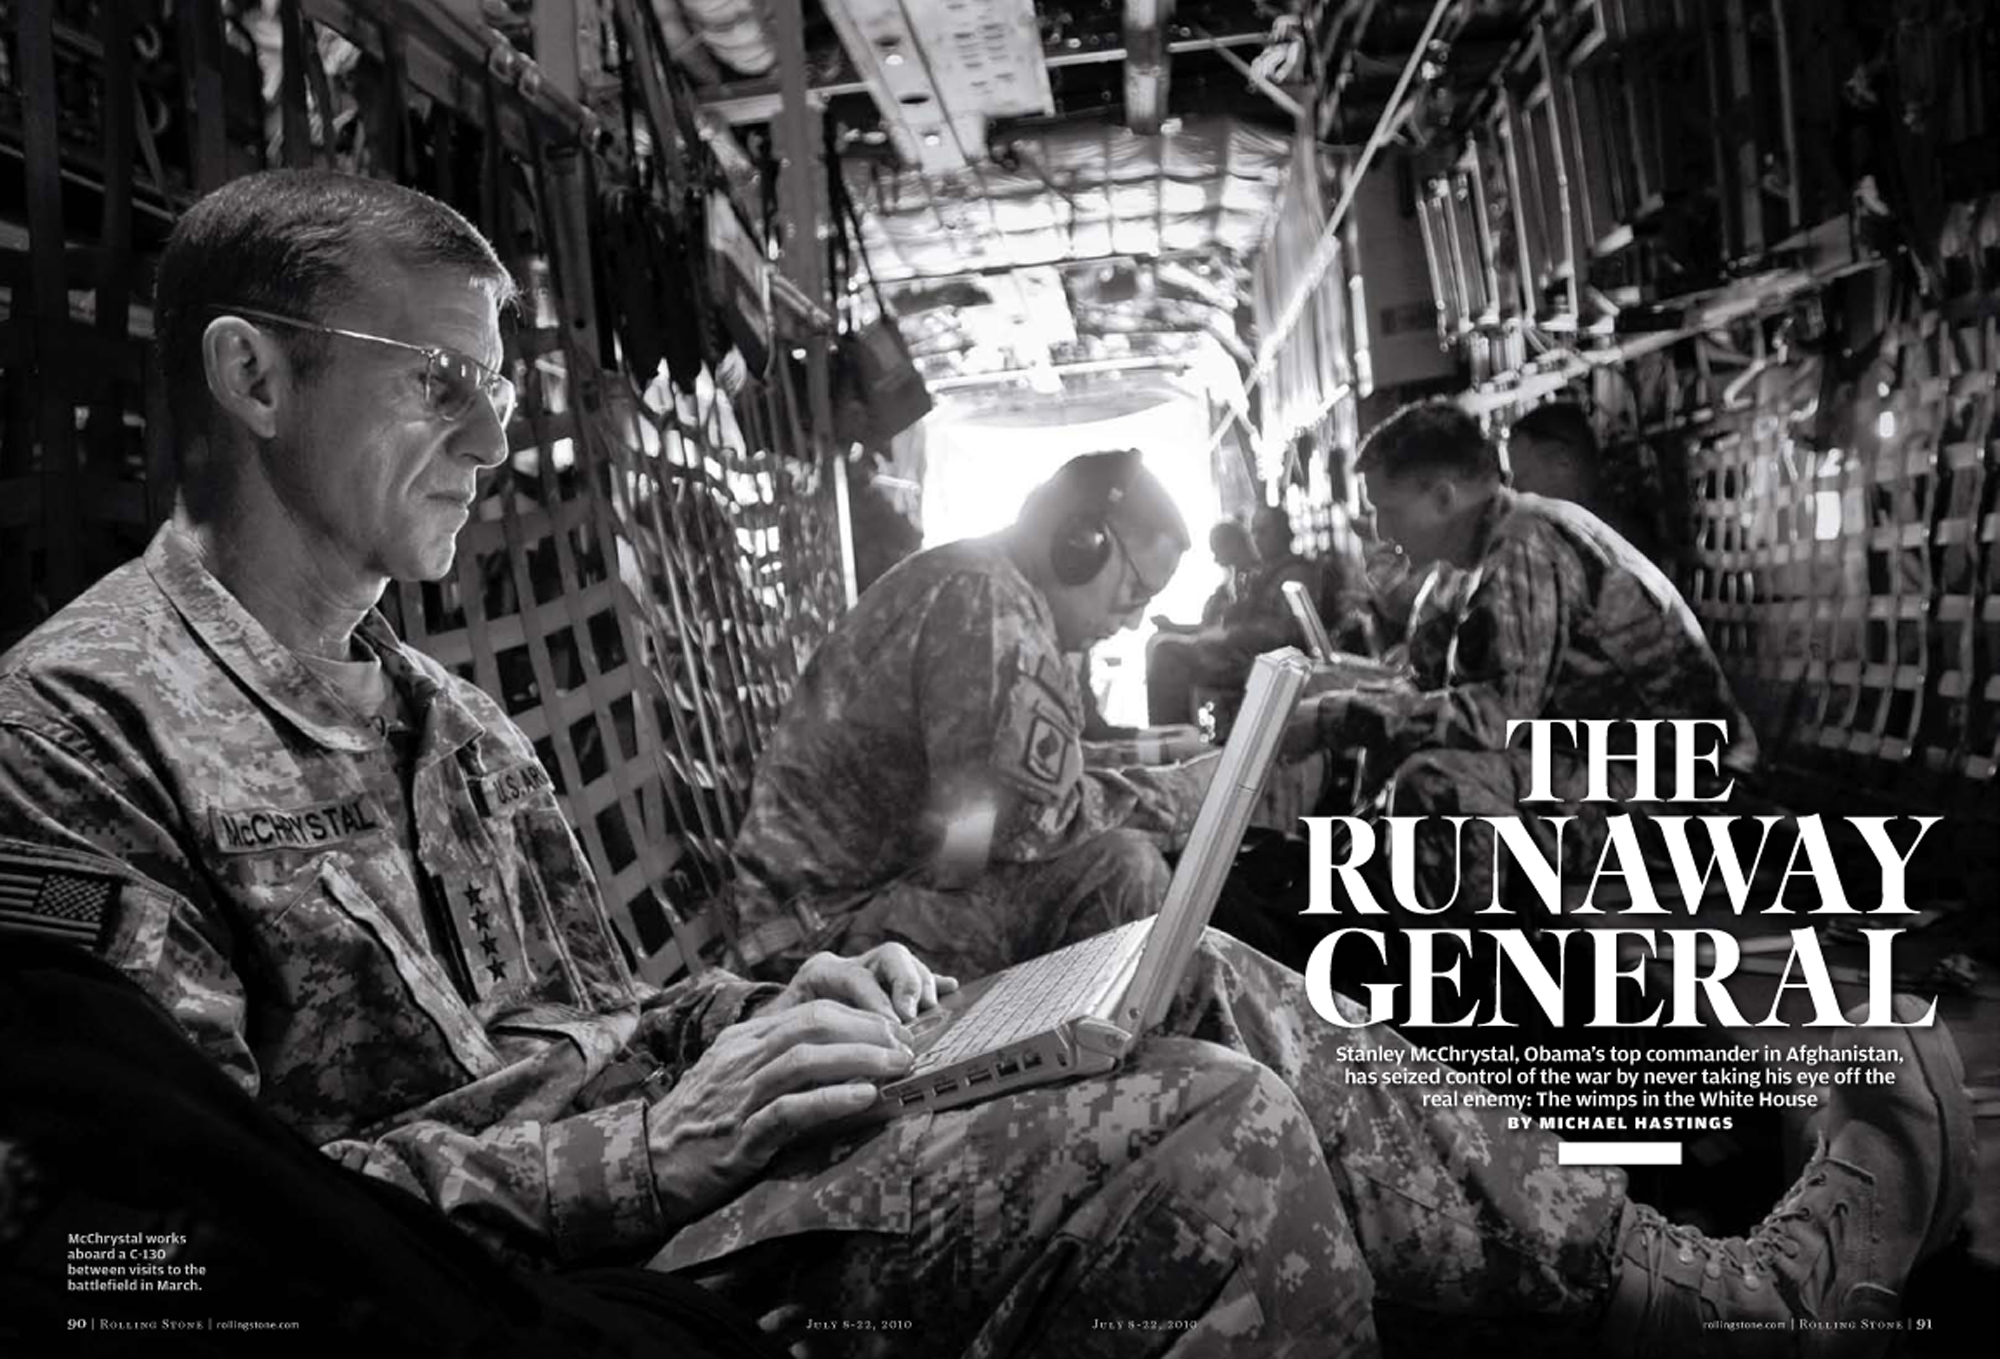 Afghanistan, Barack Obama, Rolling Stone, Stanley McChrystal